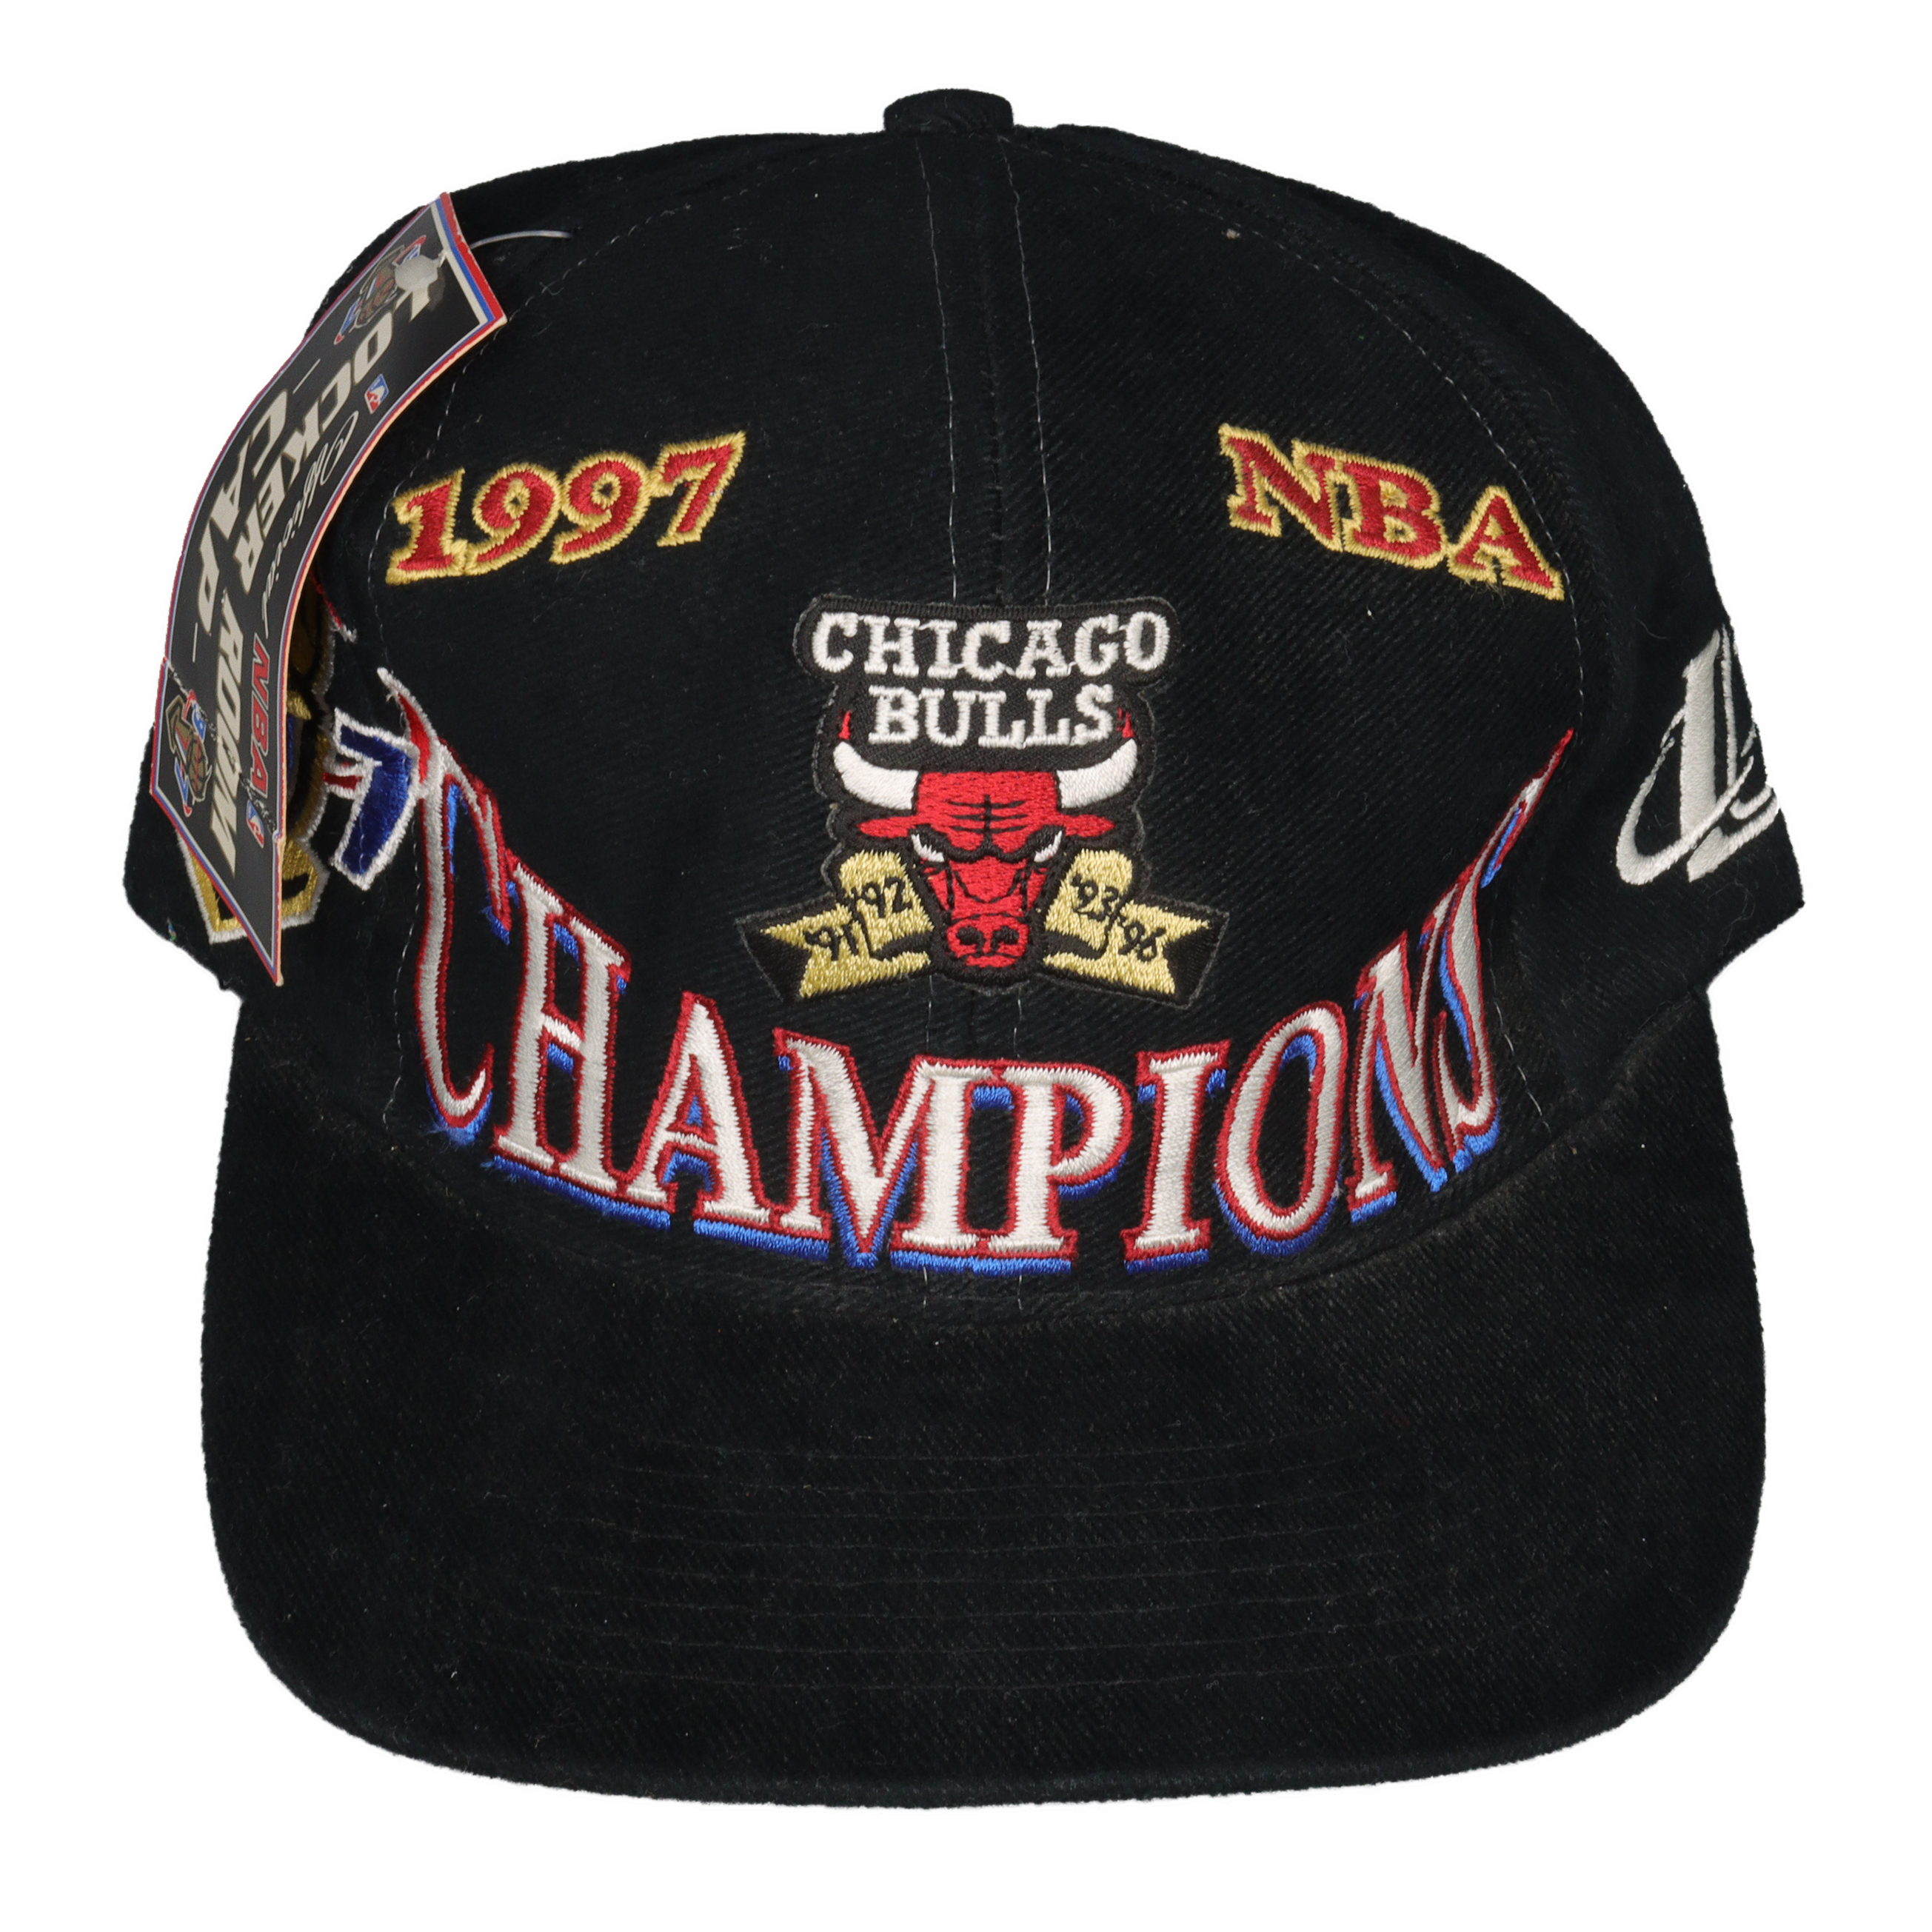 Vintage Chicago Bulls 1997 Championship 